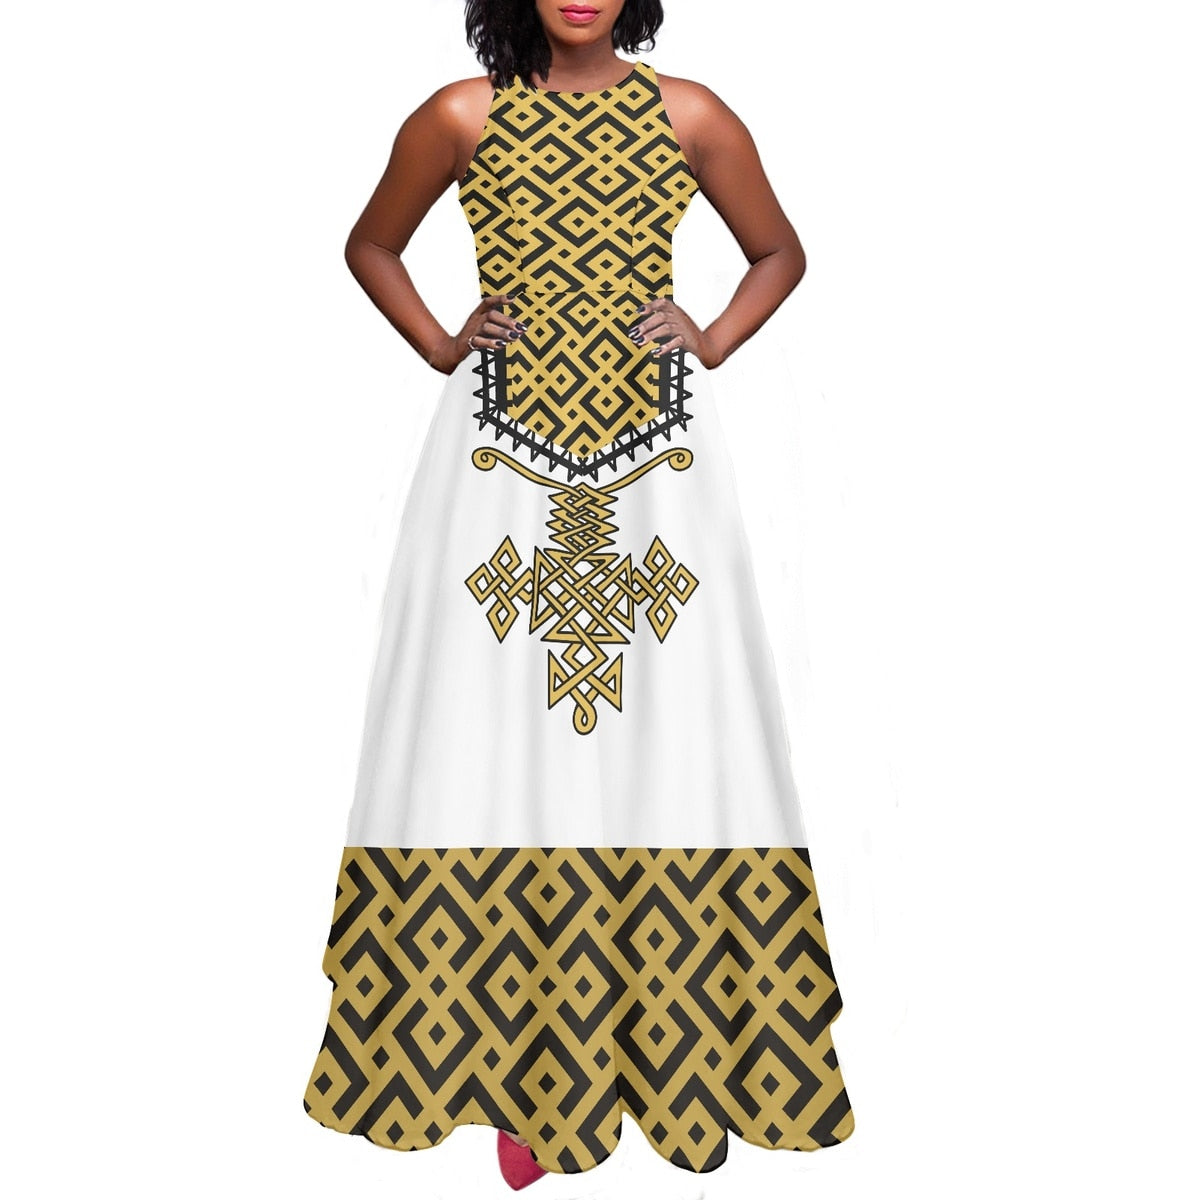 Women's Long Dress Ethiopian Fashion Ethnic Print Retro Design High Quality Sleeveless Dress- Customised